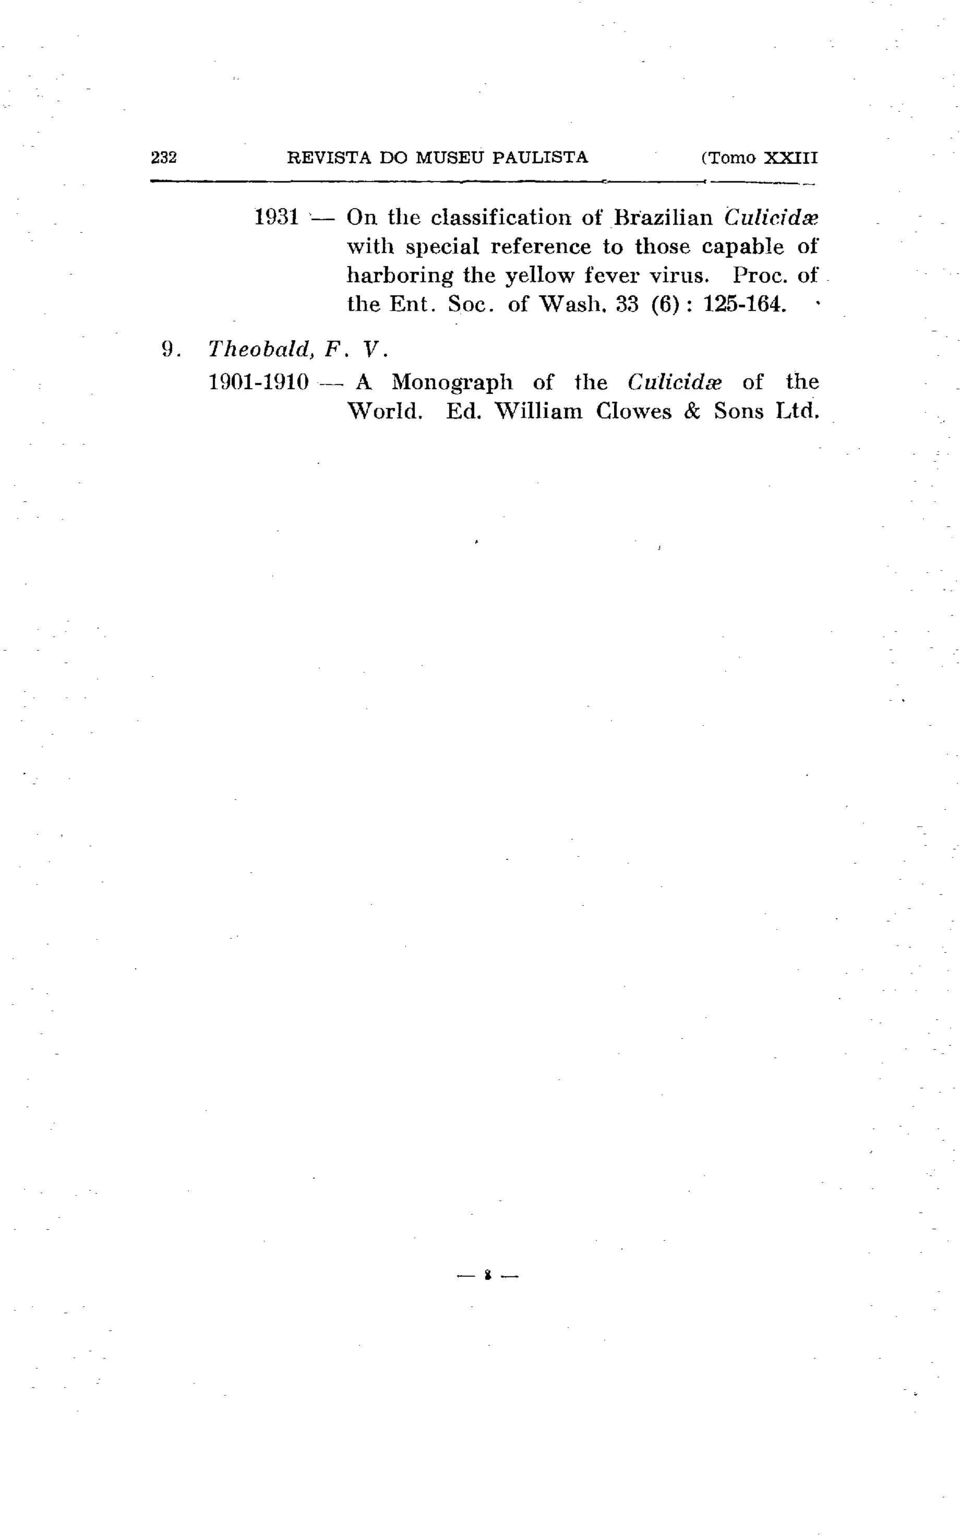 fever virus. Proc. of the Ent. Sot. of Wash. 33 (6) : X25-164. * 9. Theobald, F. V.